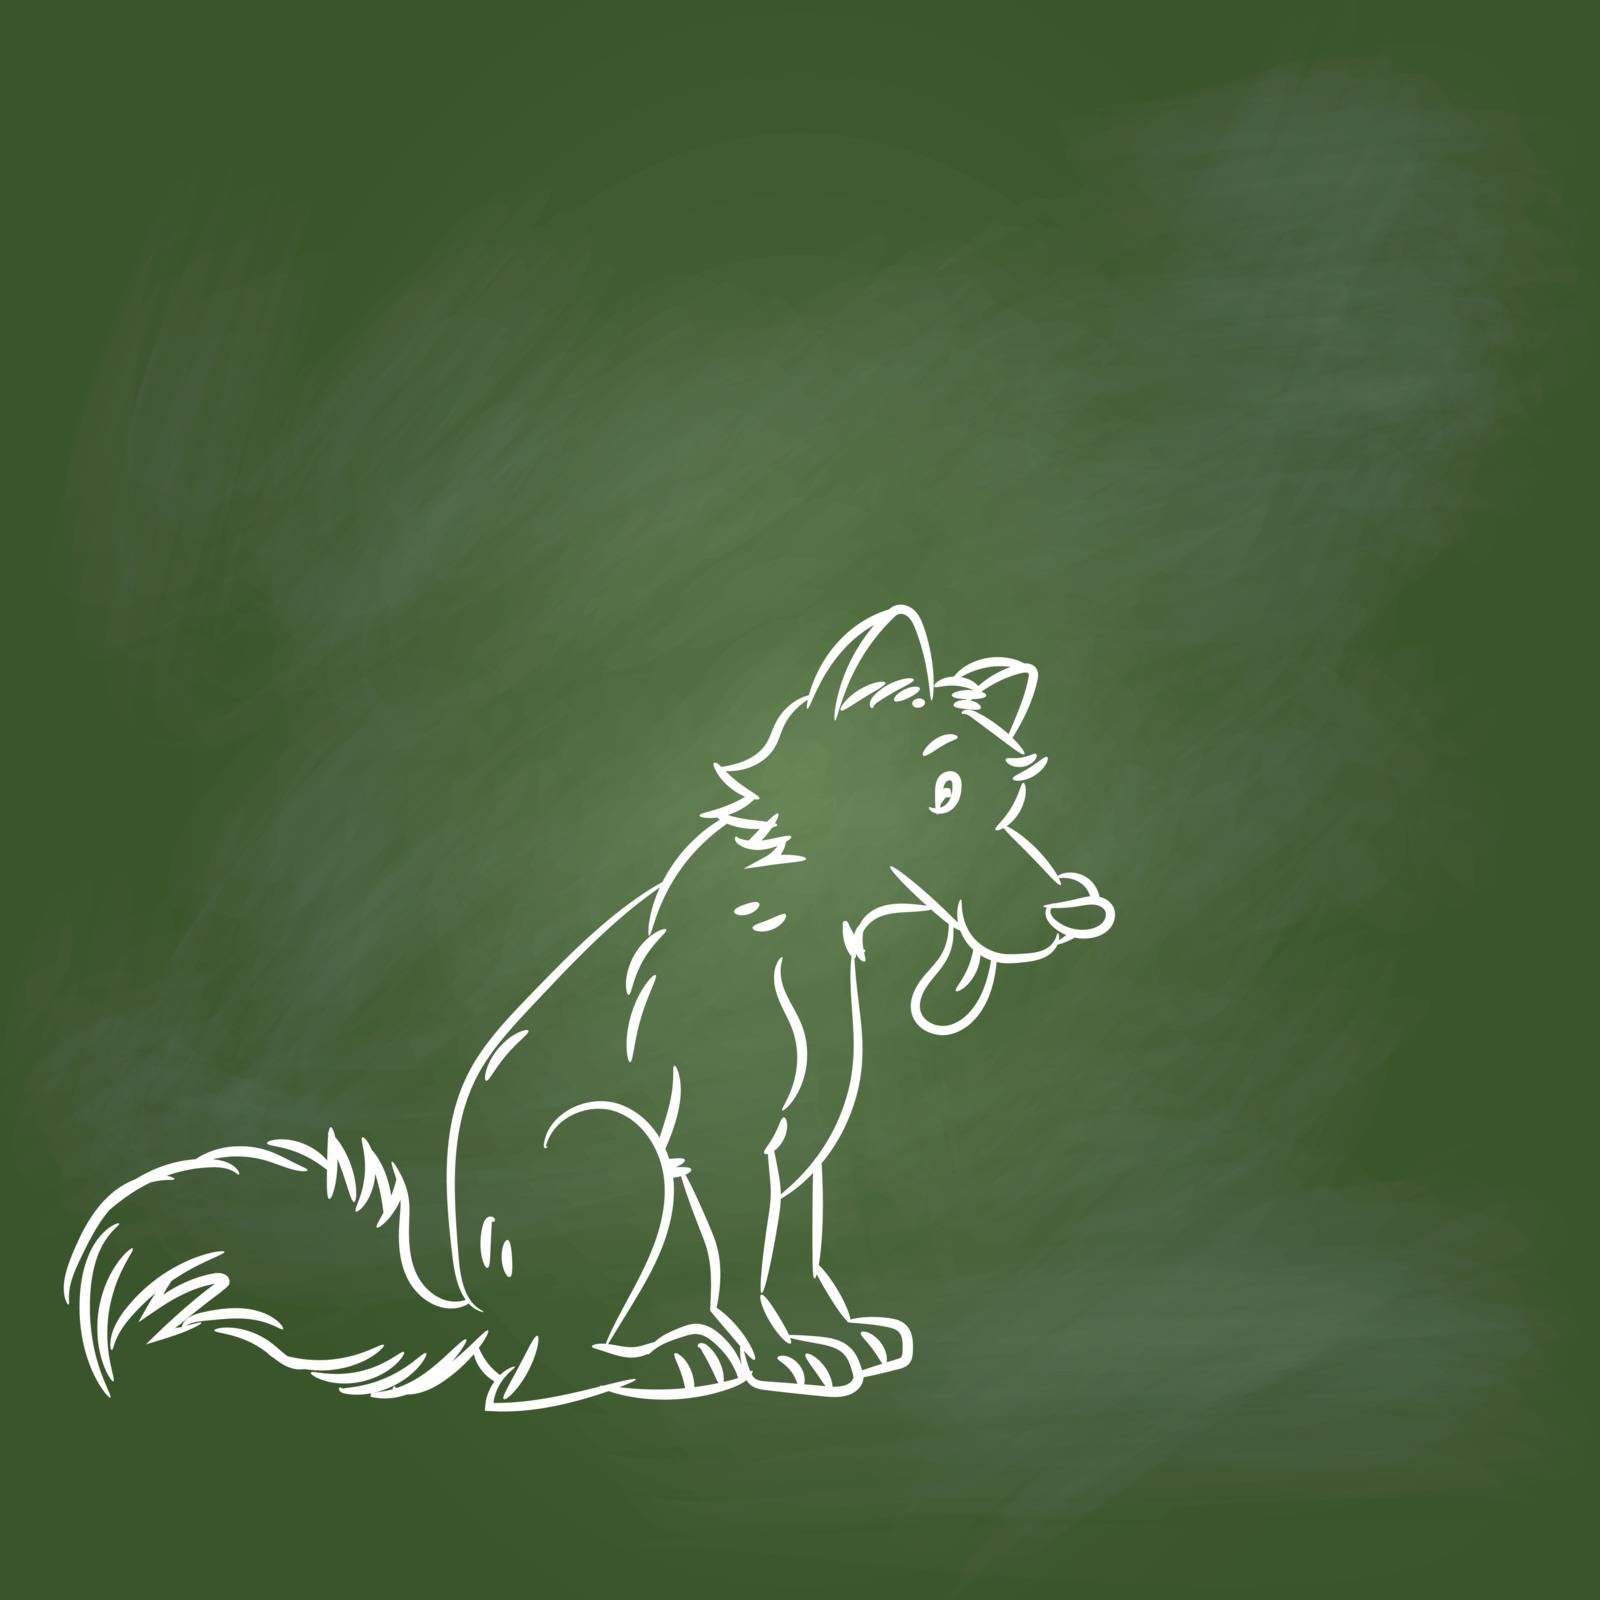 Hand drawing Dog Cartoon on Green board -Vector illustration by solargaria